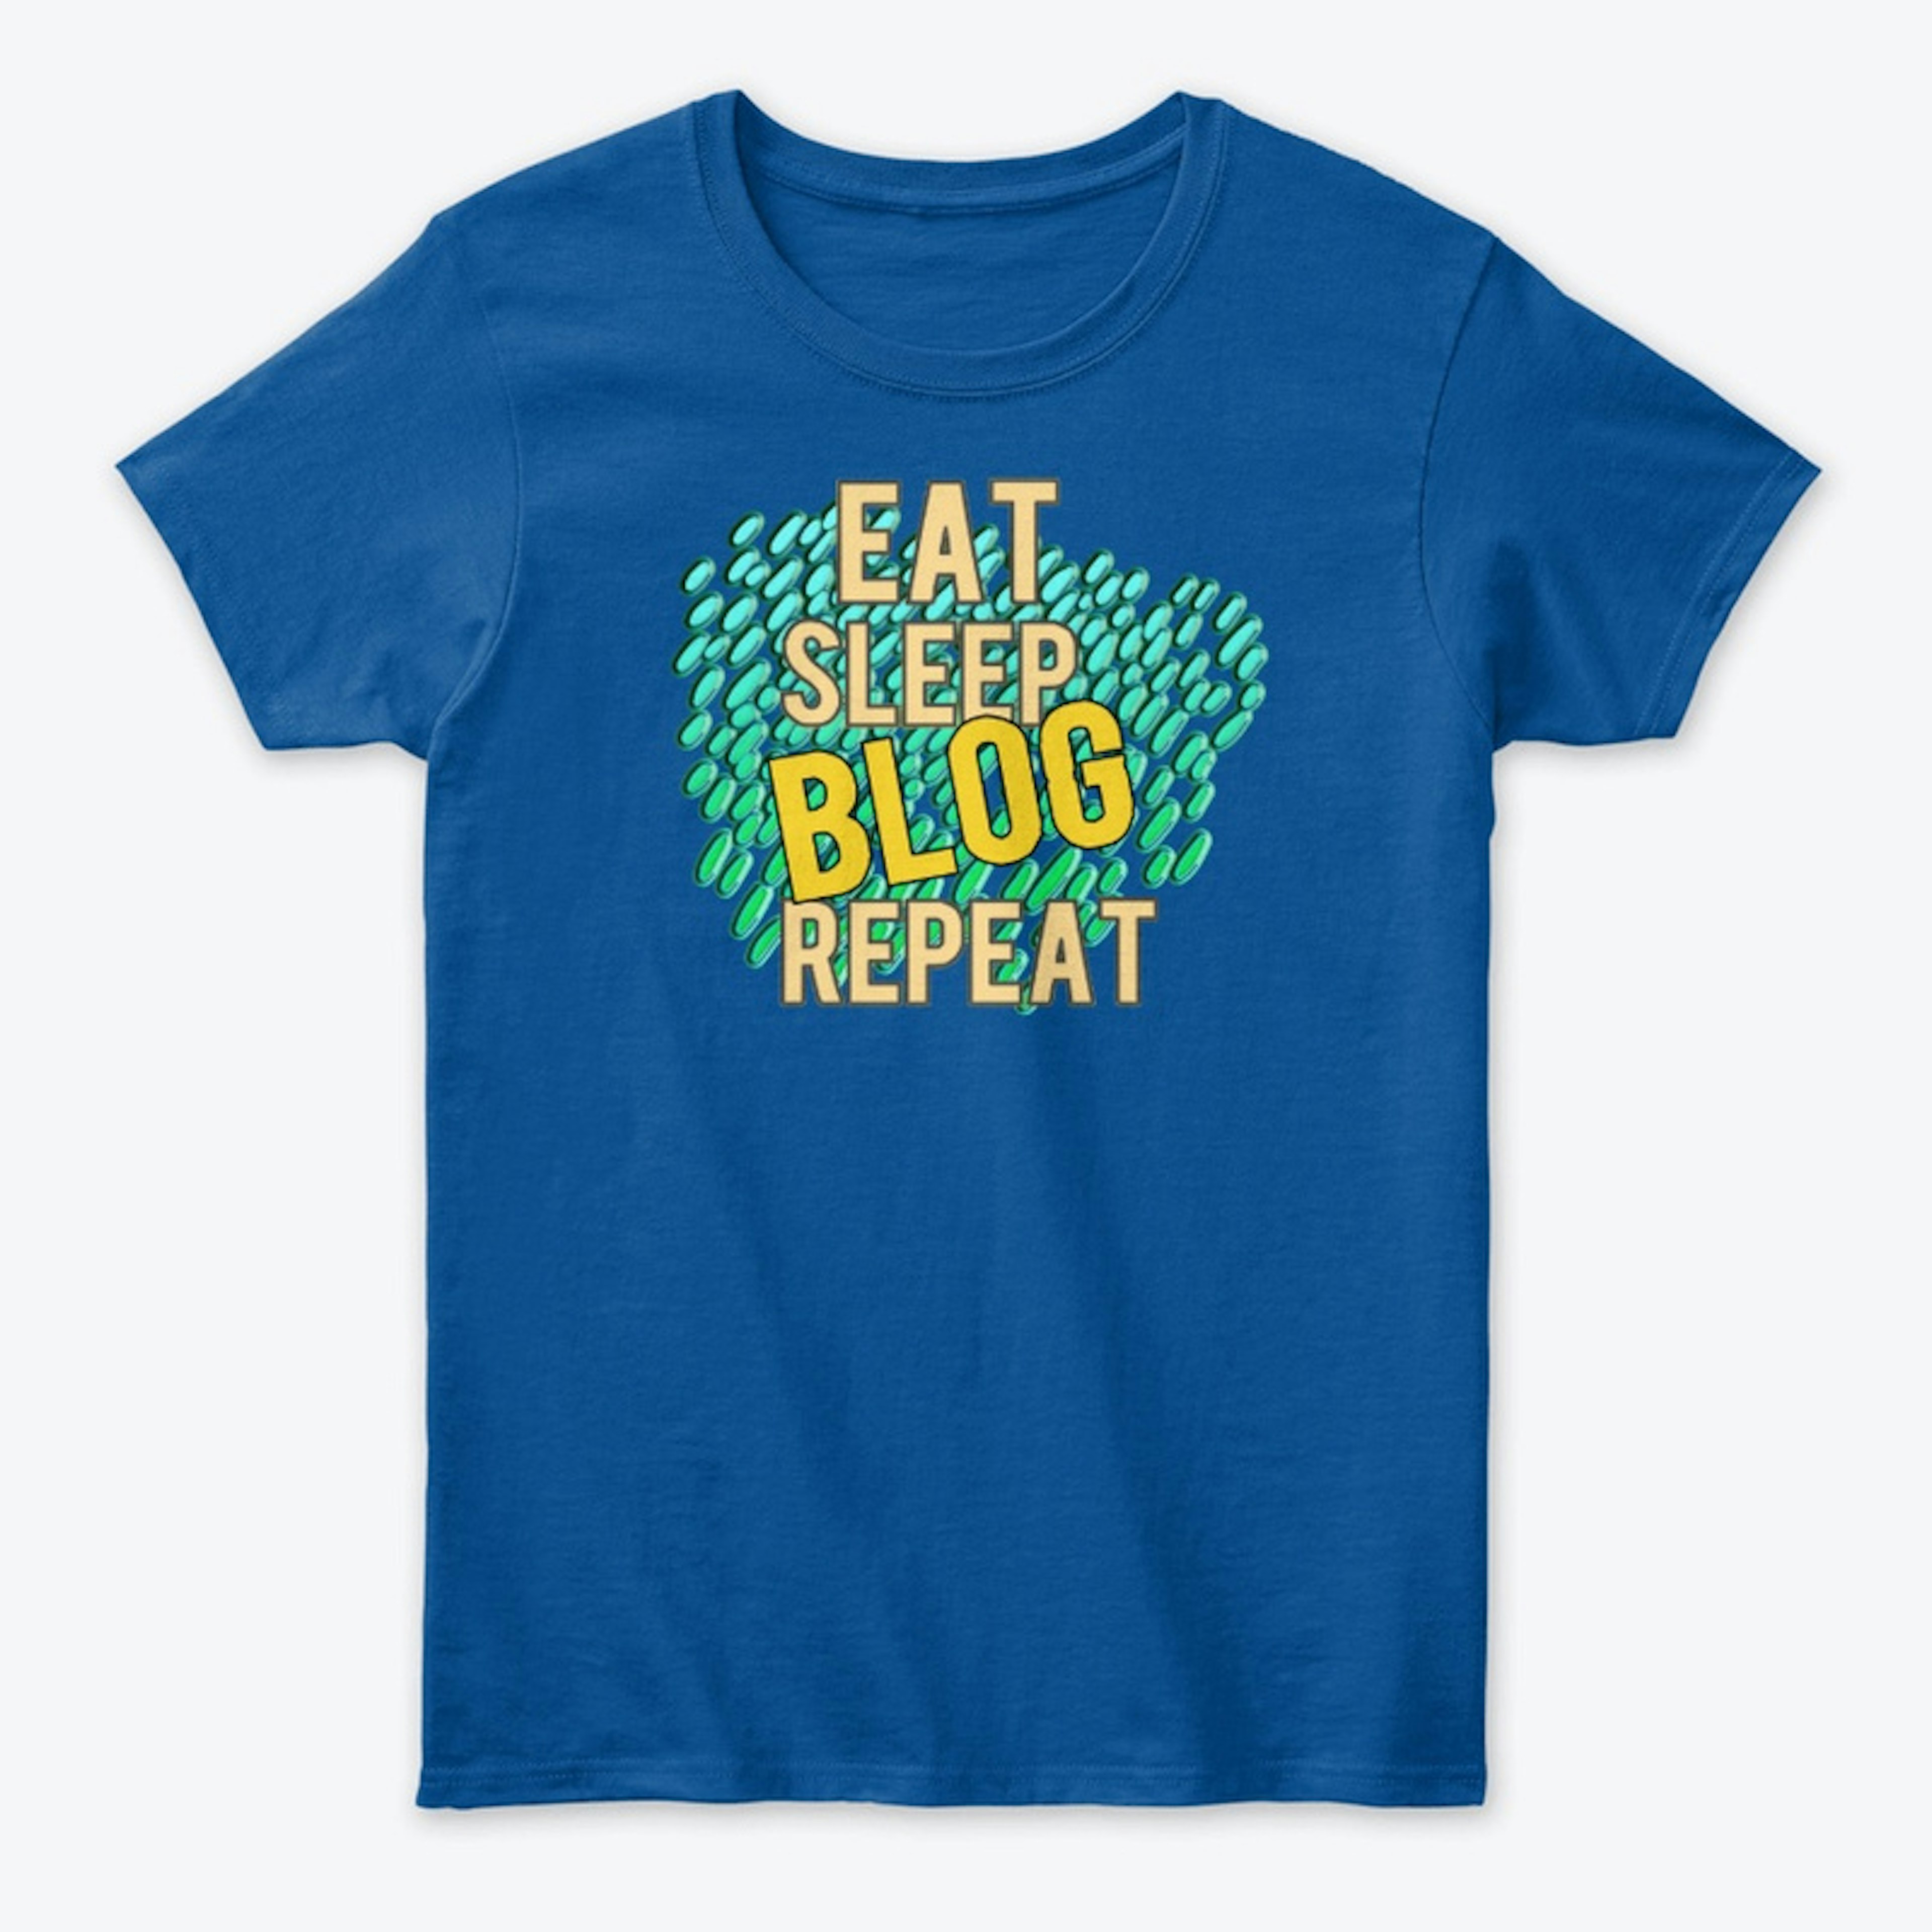 Eat, Sleep, Blog, Repeat